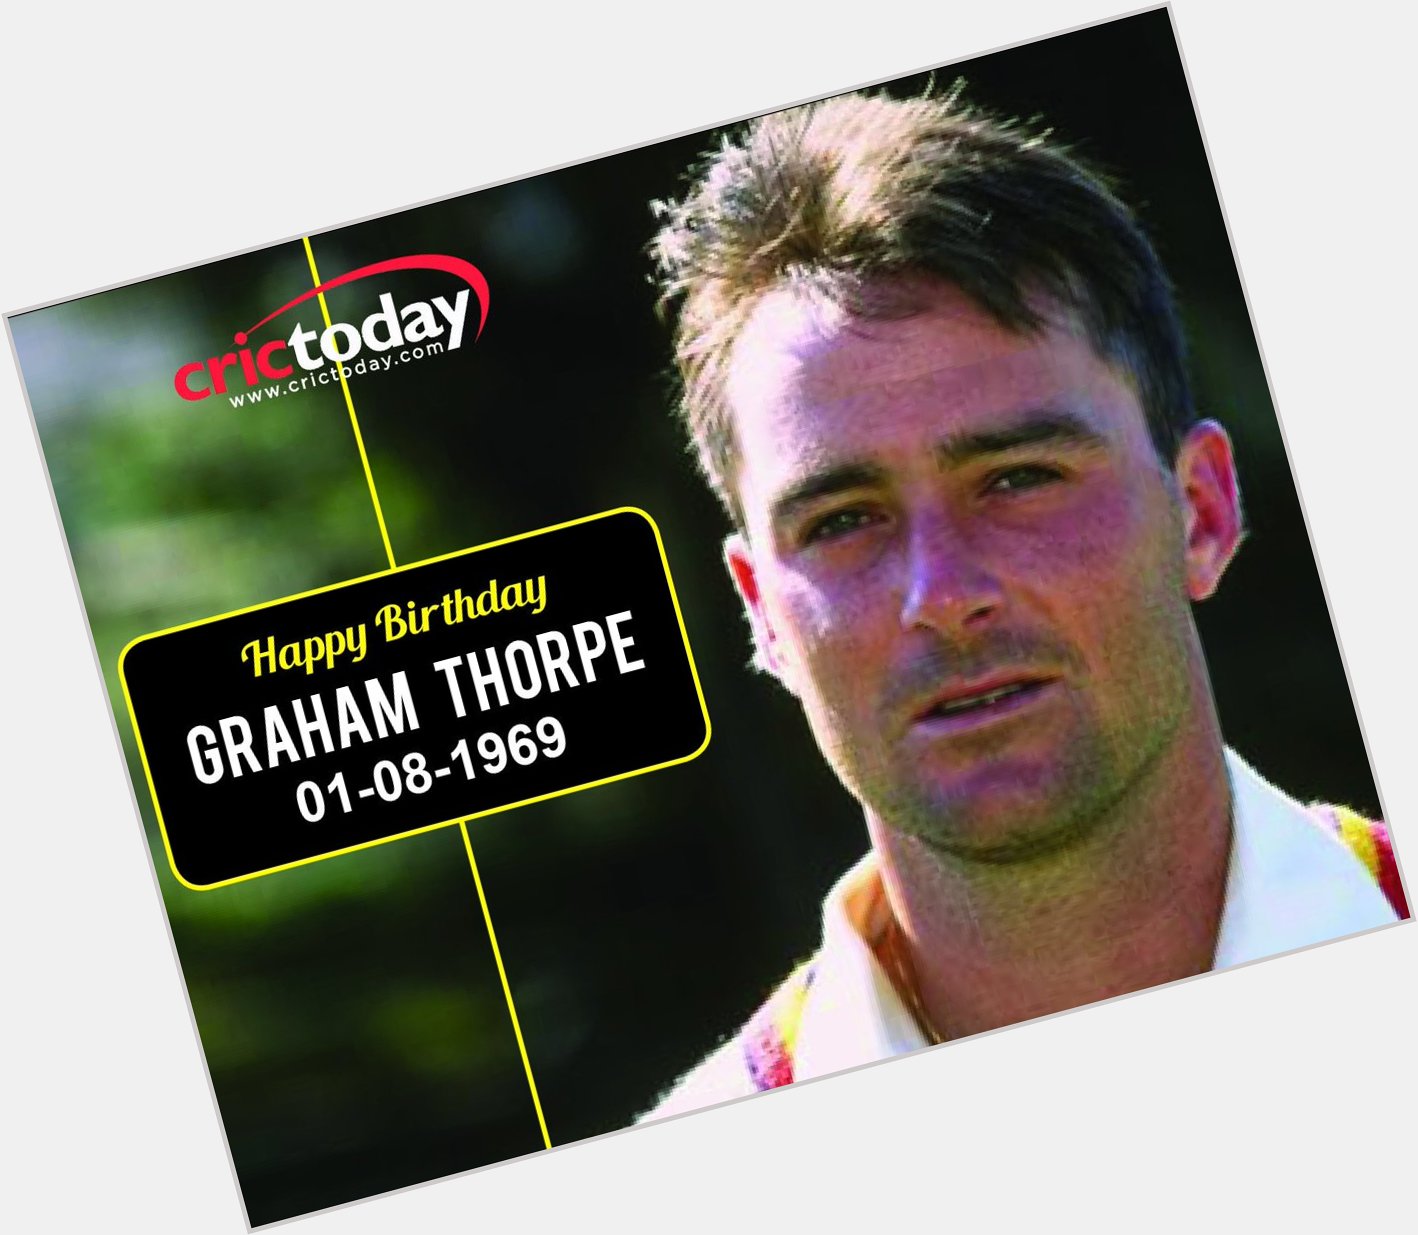  Happy Birthday Graham Thorpe 